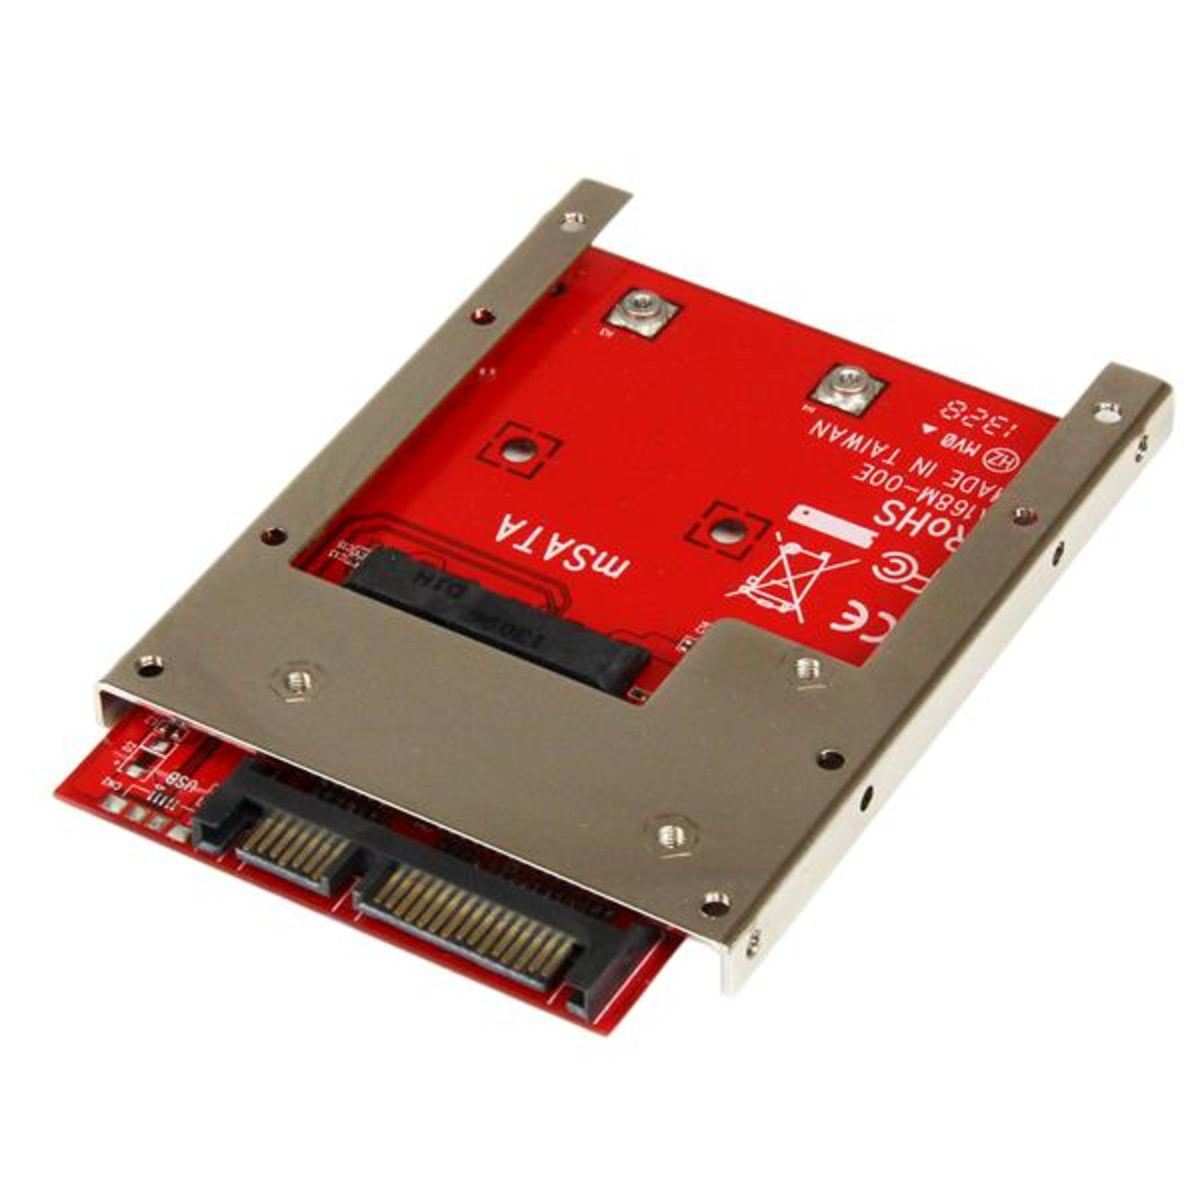 mSATA SSD-2.5in SATA Adapter Converter